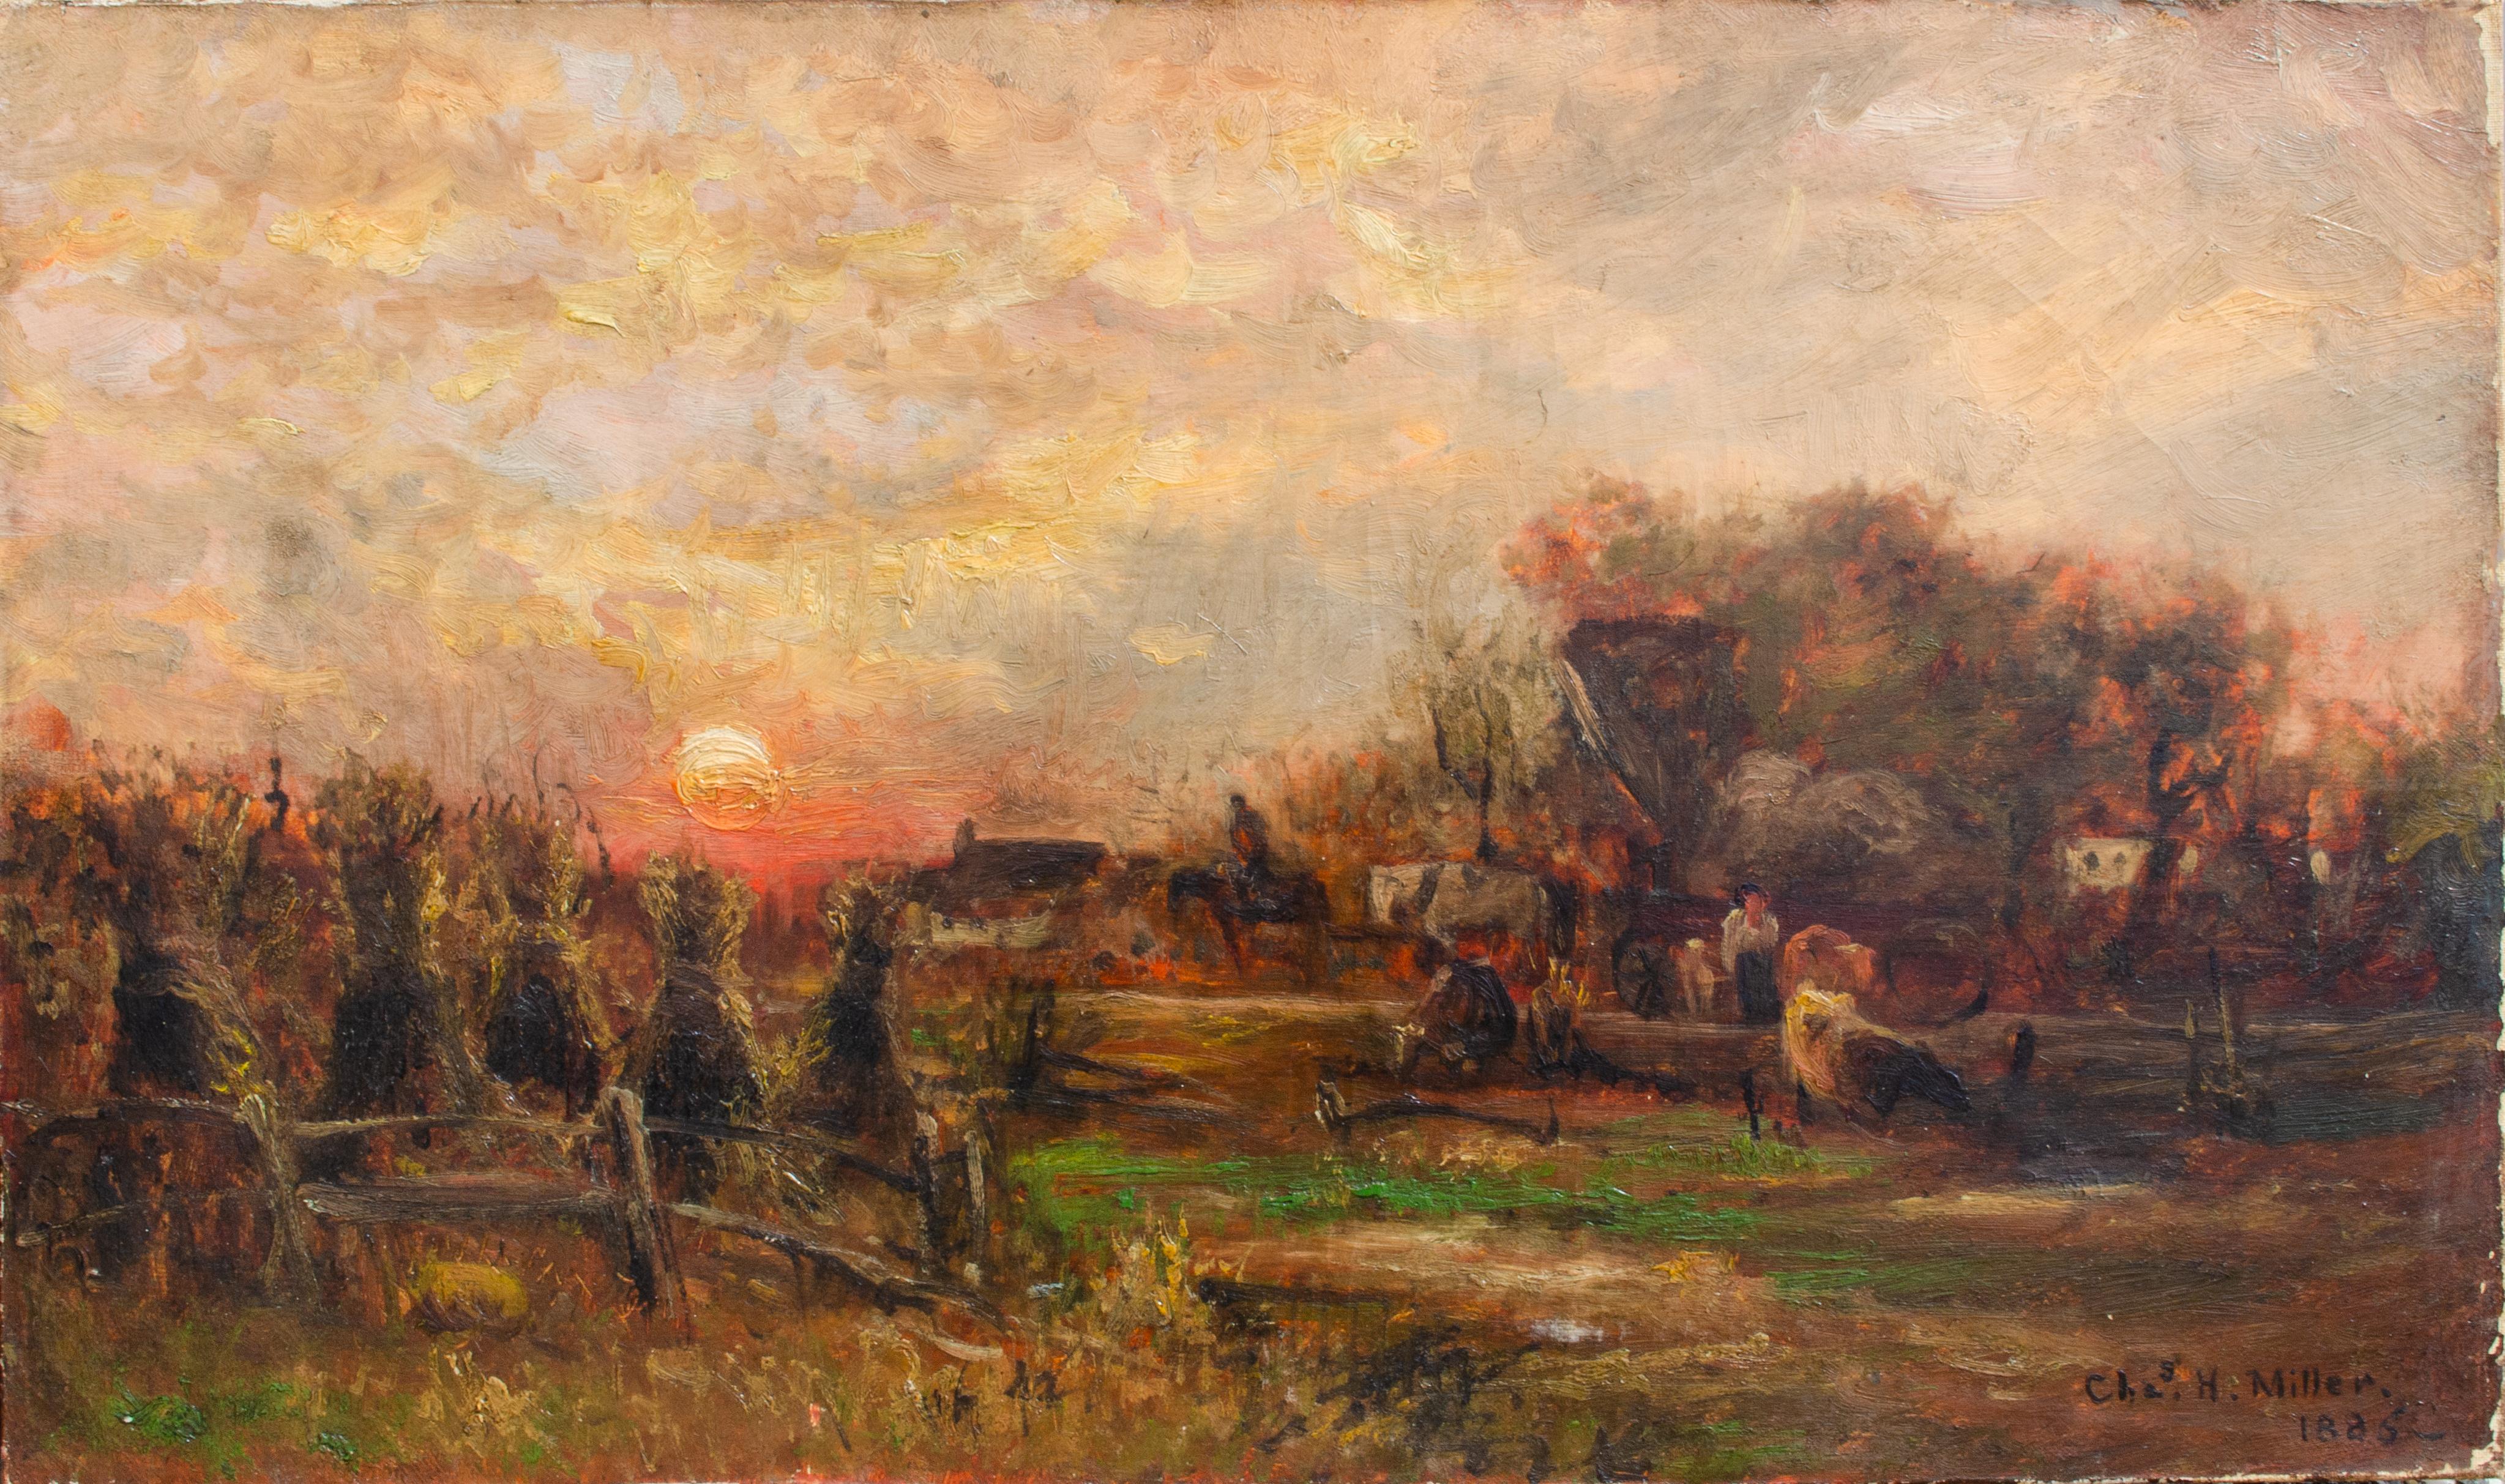 Charles Henry Miller Landscape Painting - Farm At Dusk by Long Island Artist Charles H. Miller, 1865